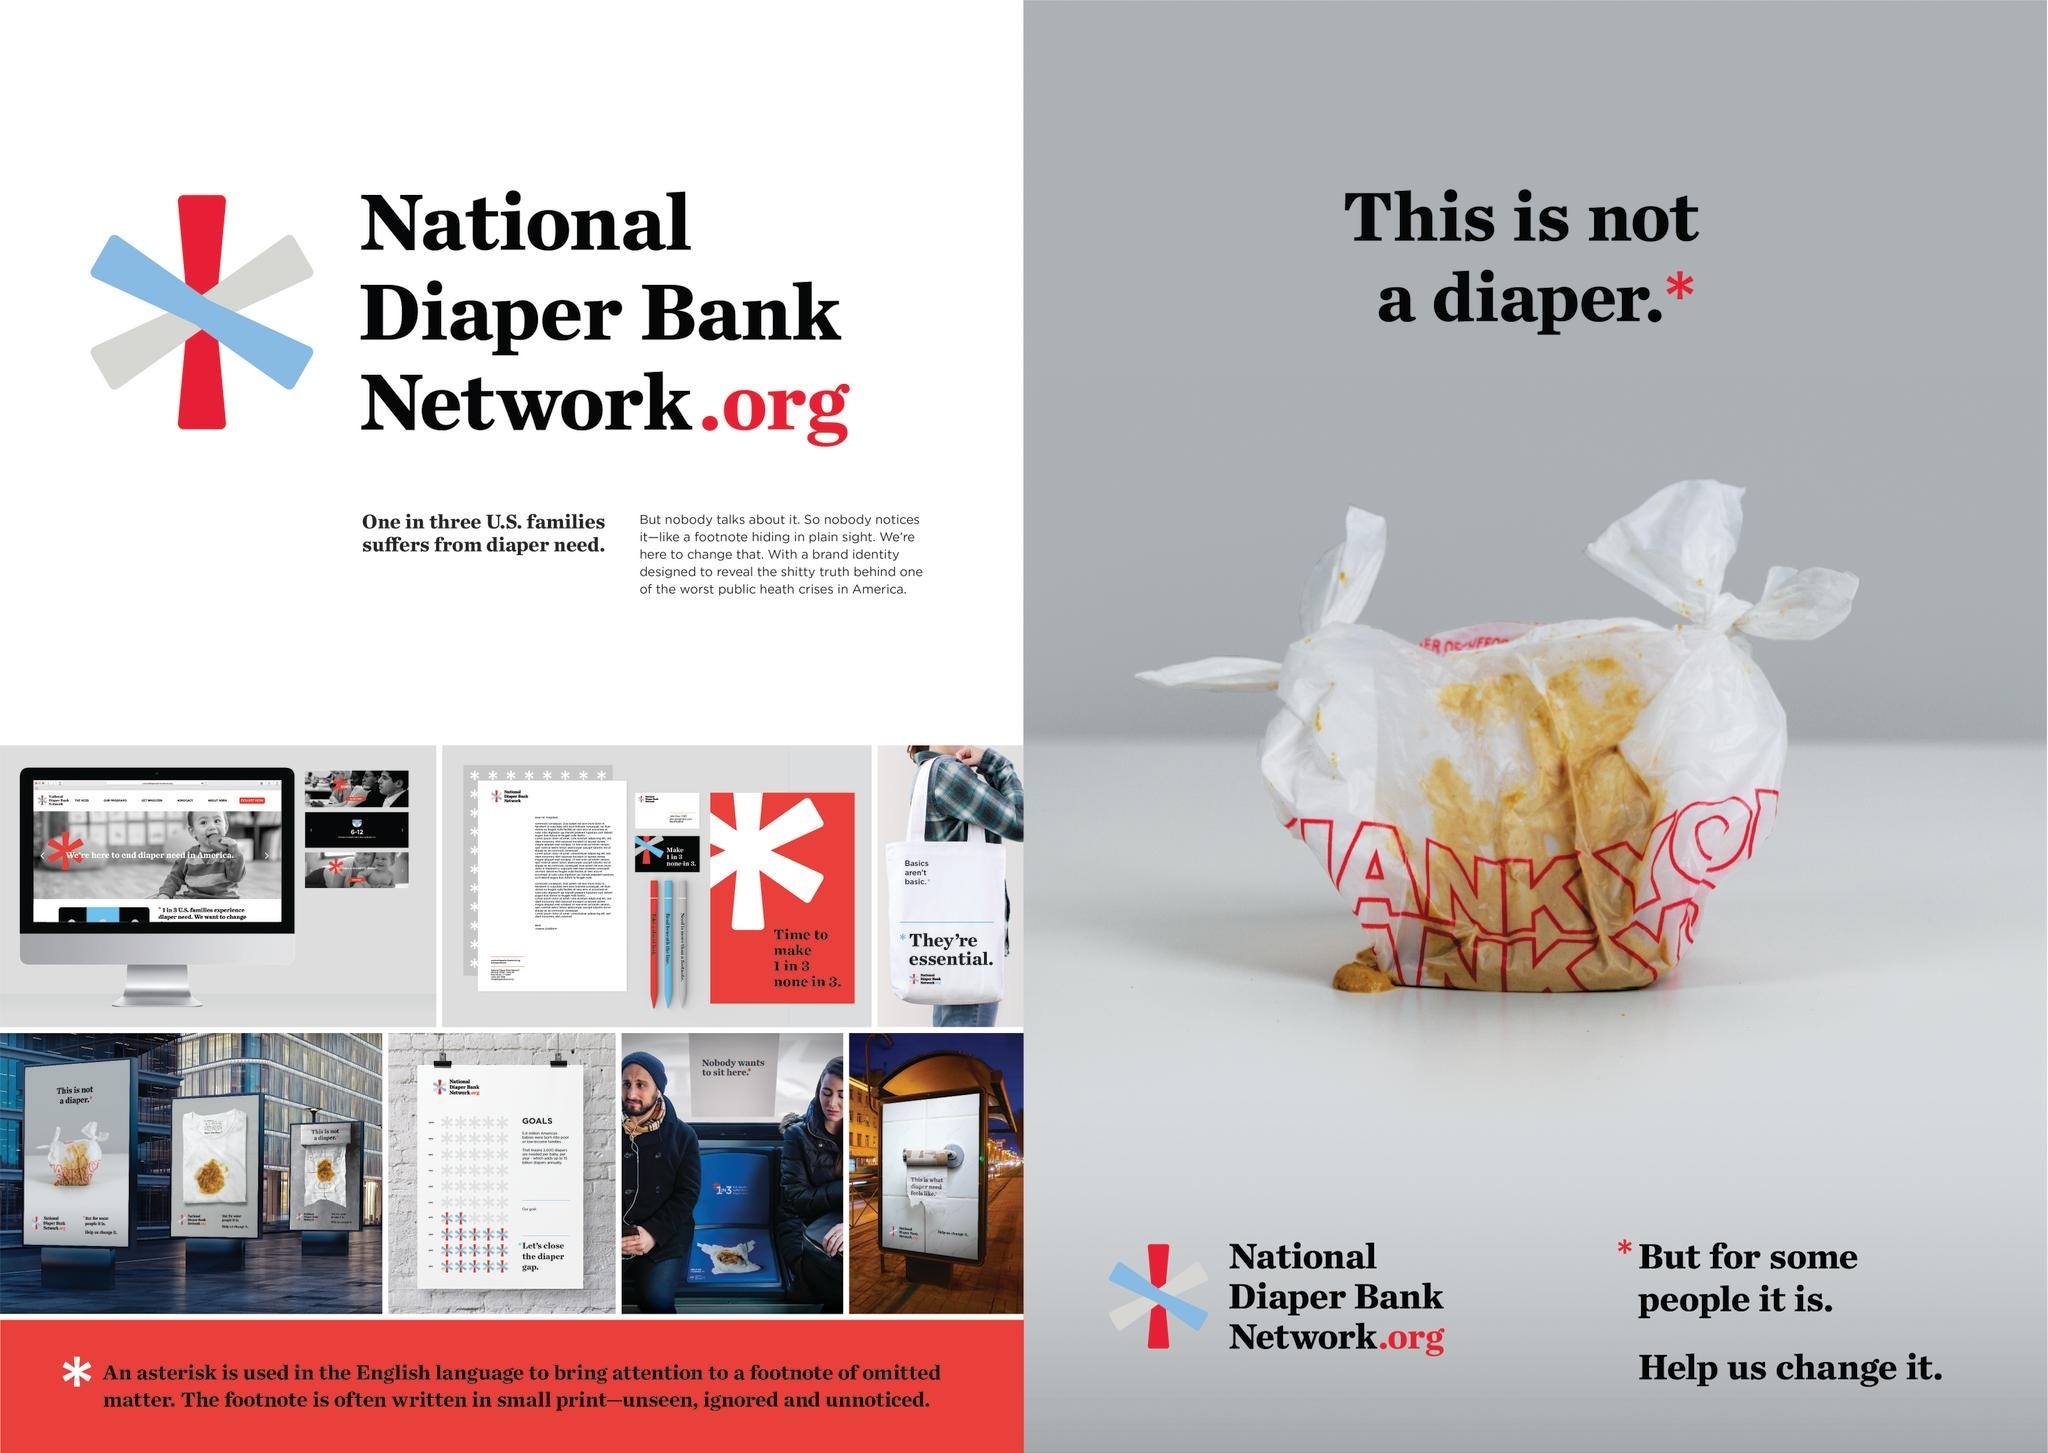 National Diaper Bank Network: Closer Look